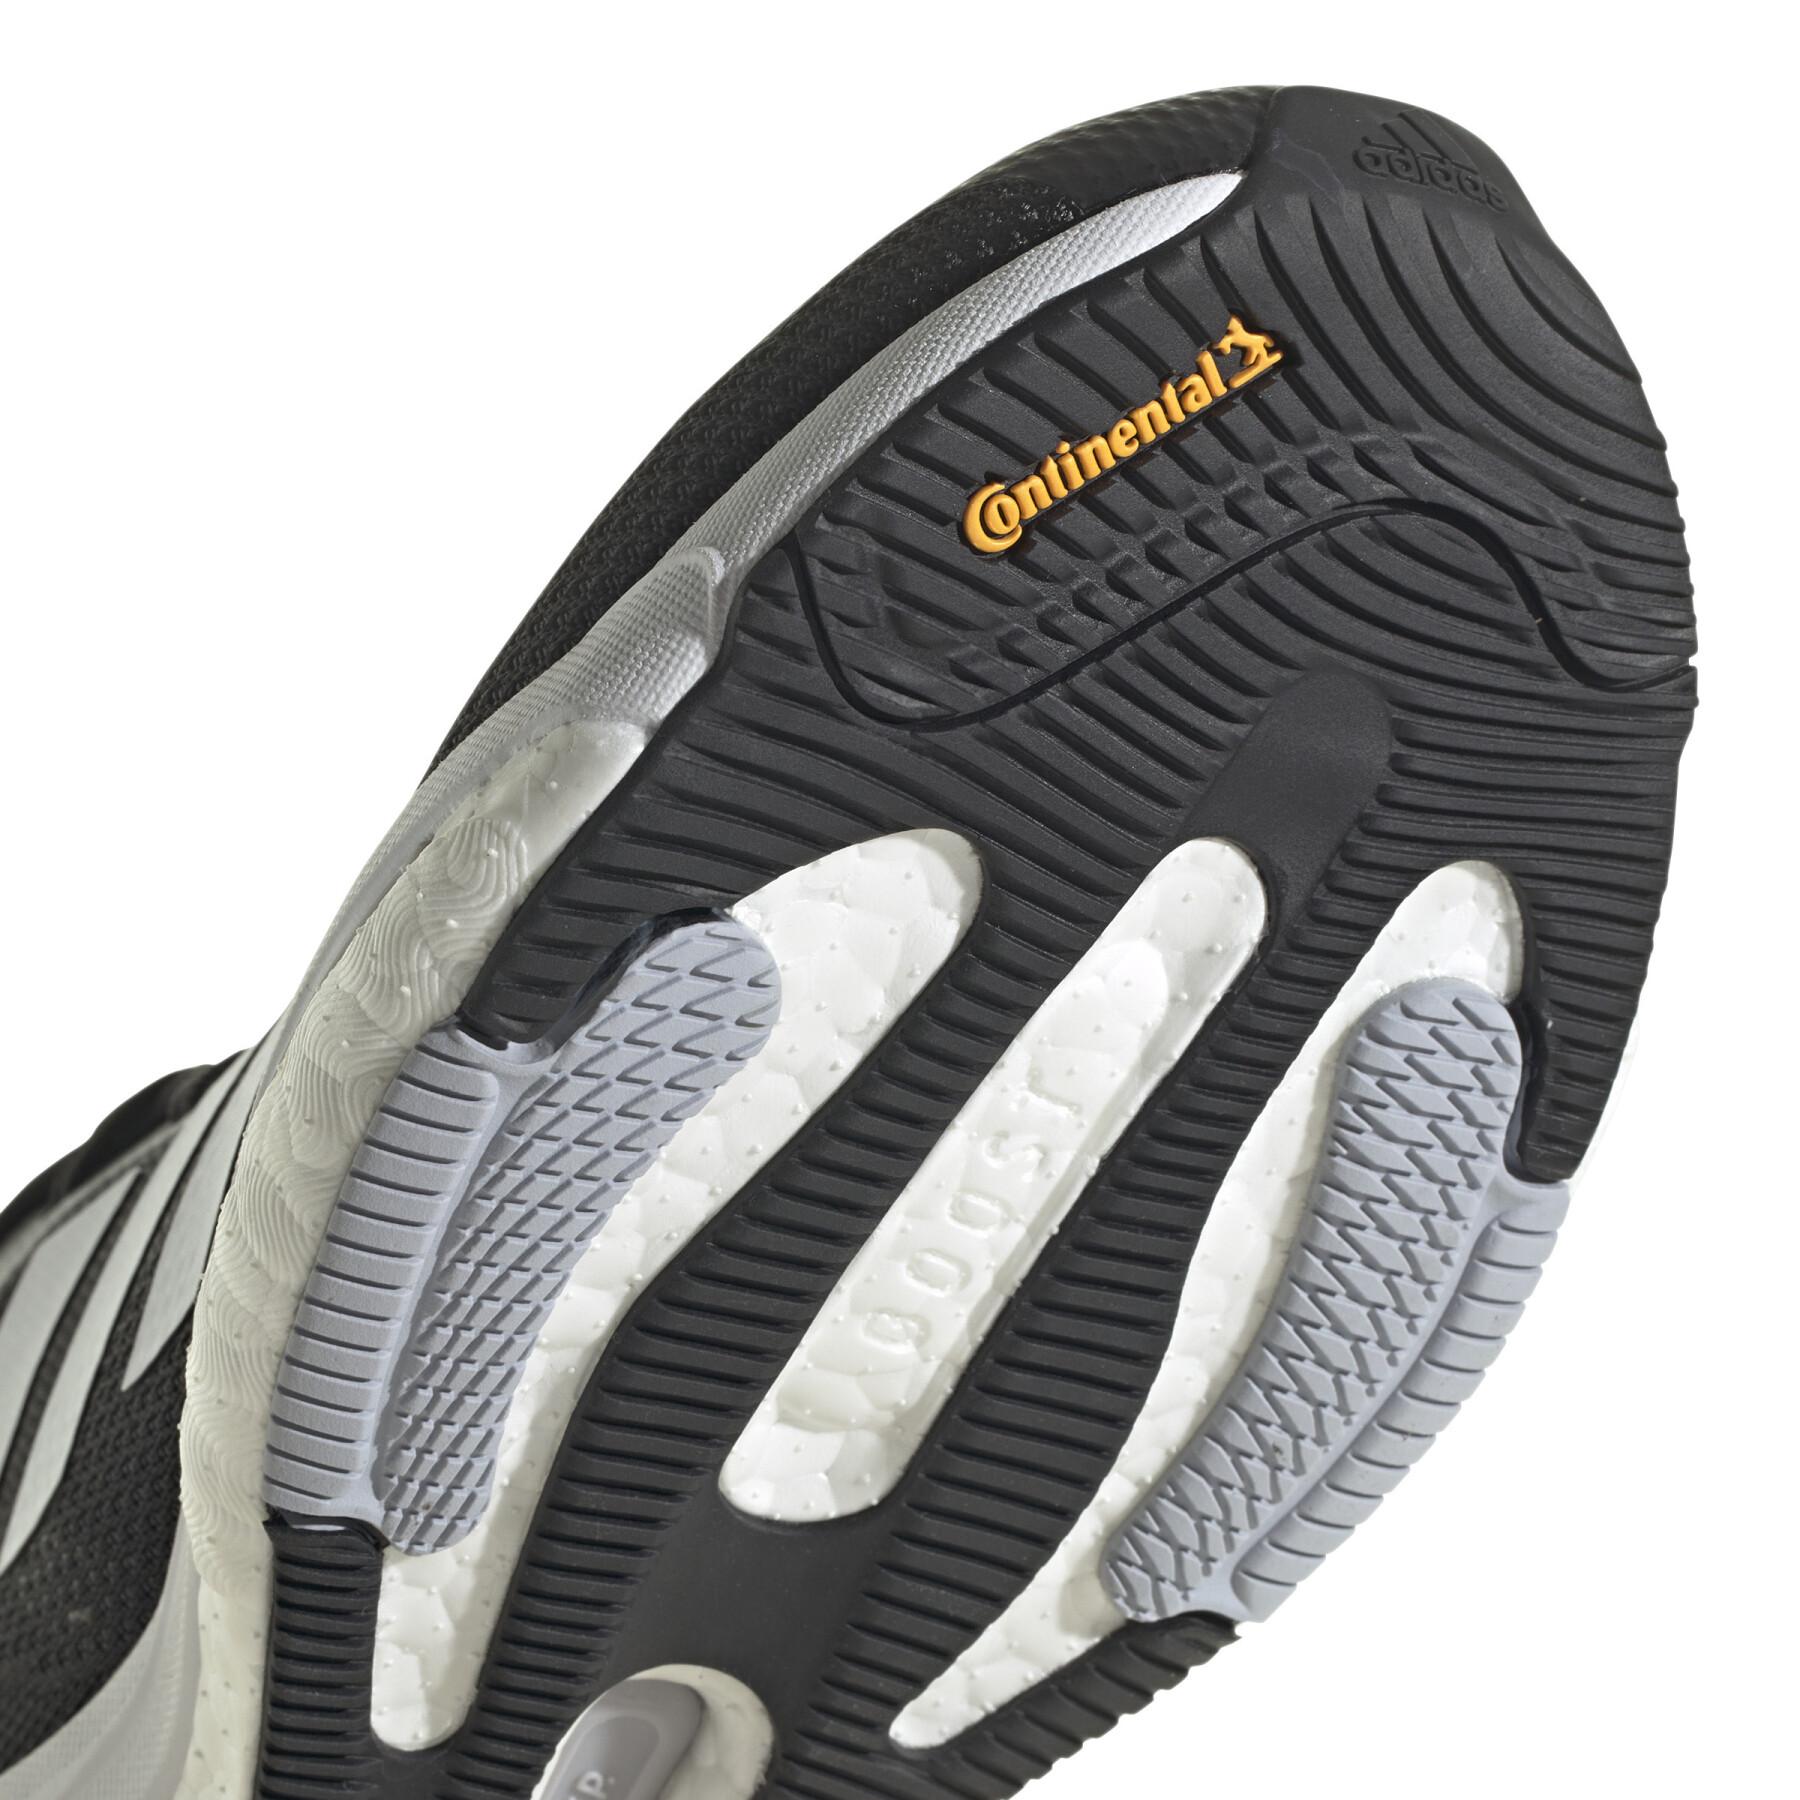  running buty dla dziewczynki adidas Solarglide 5